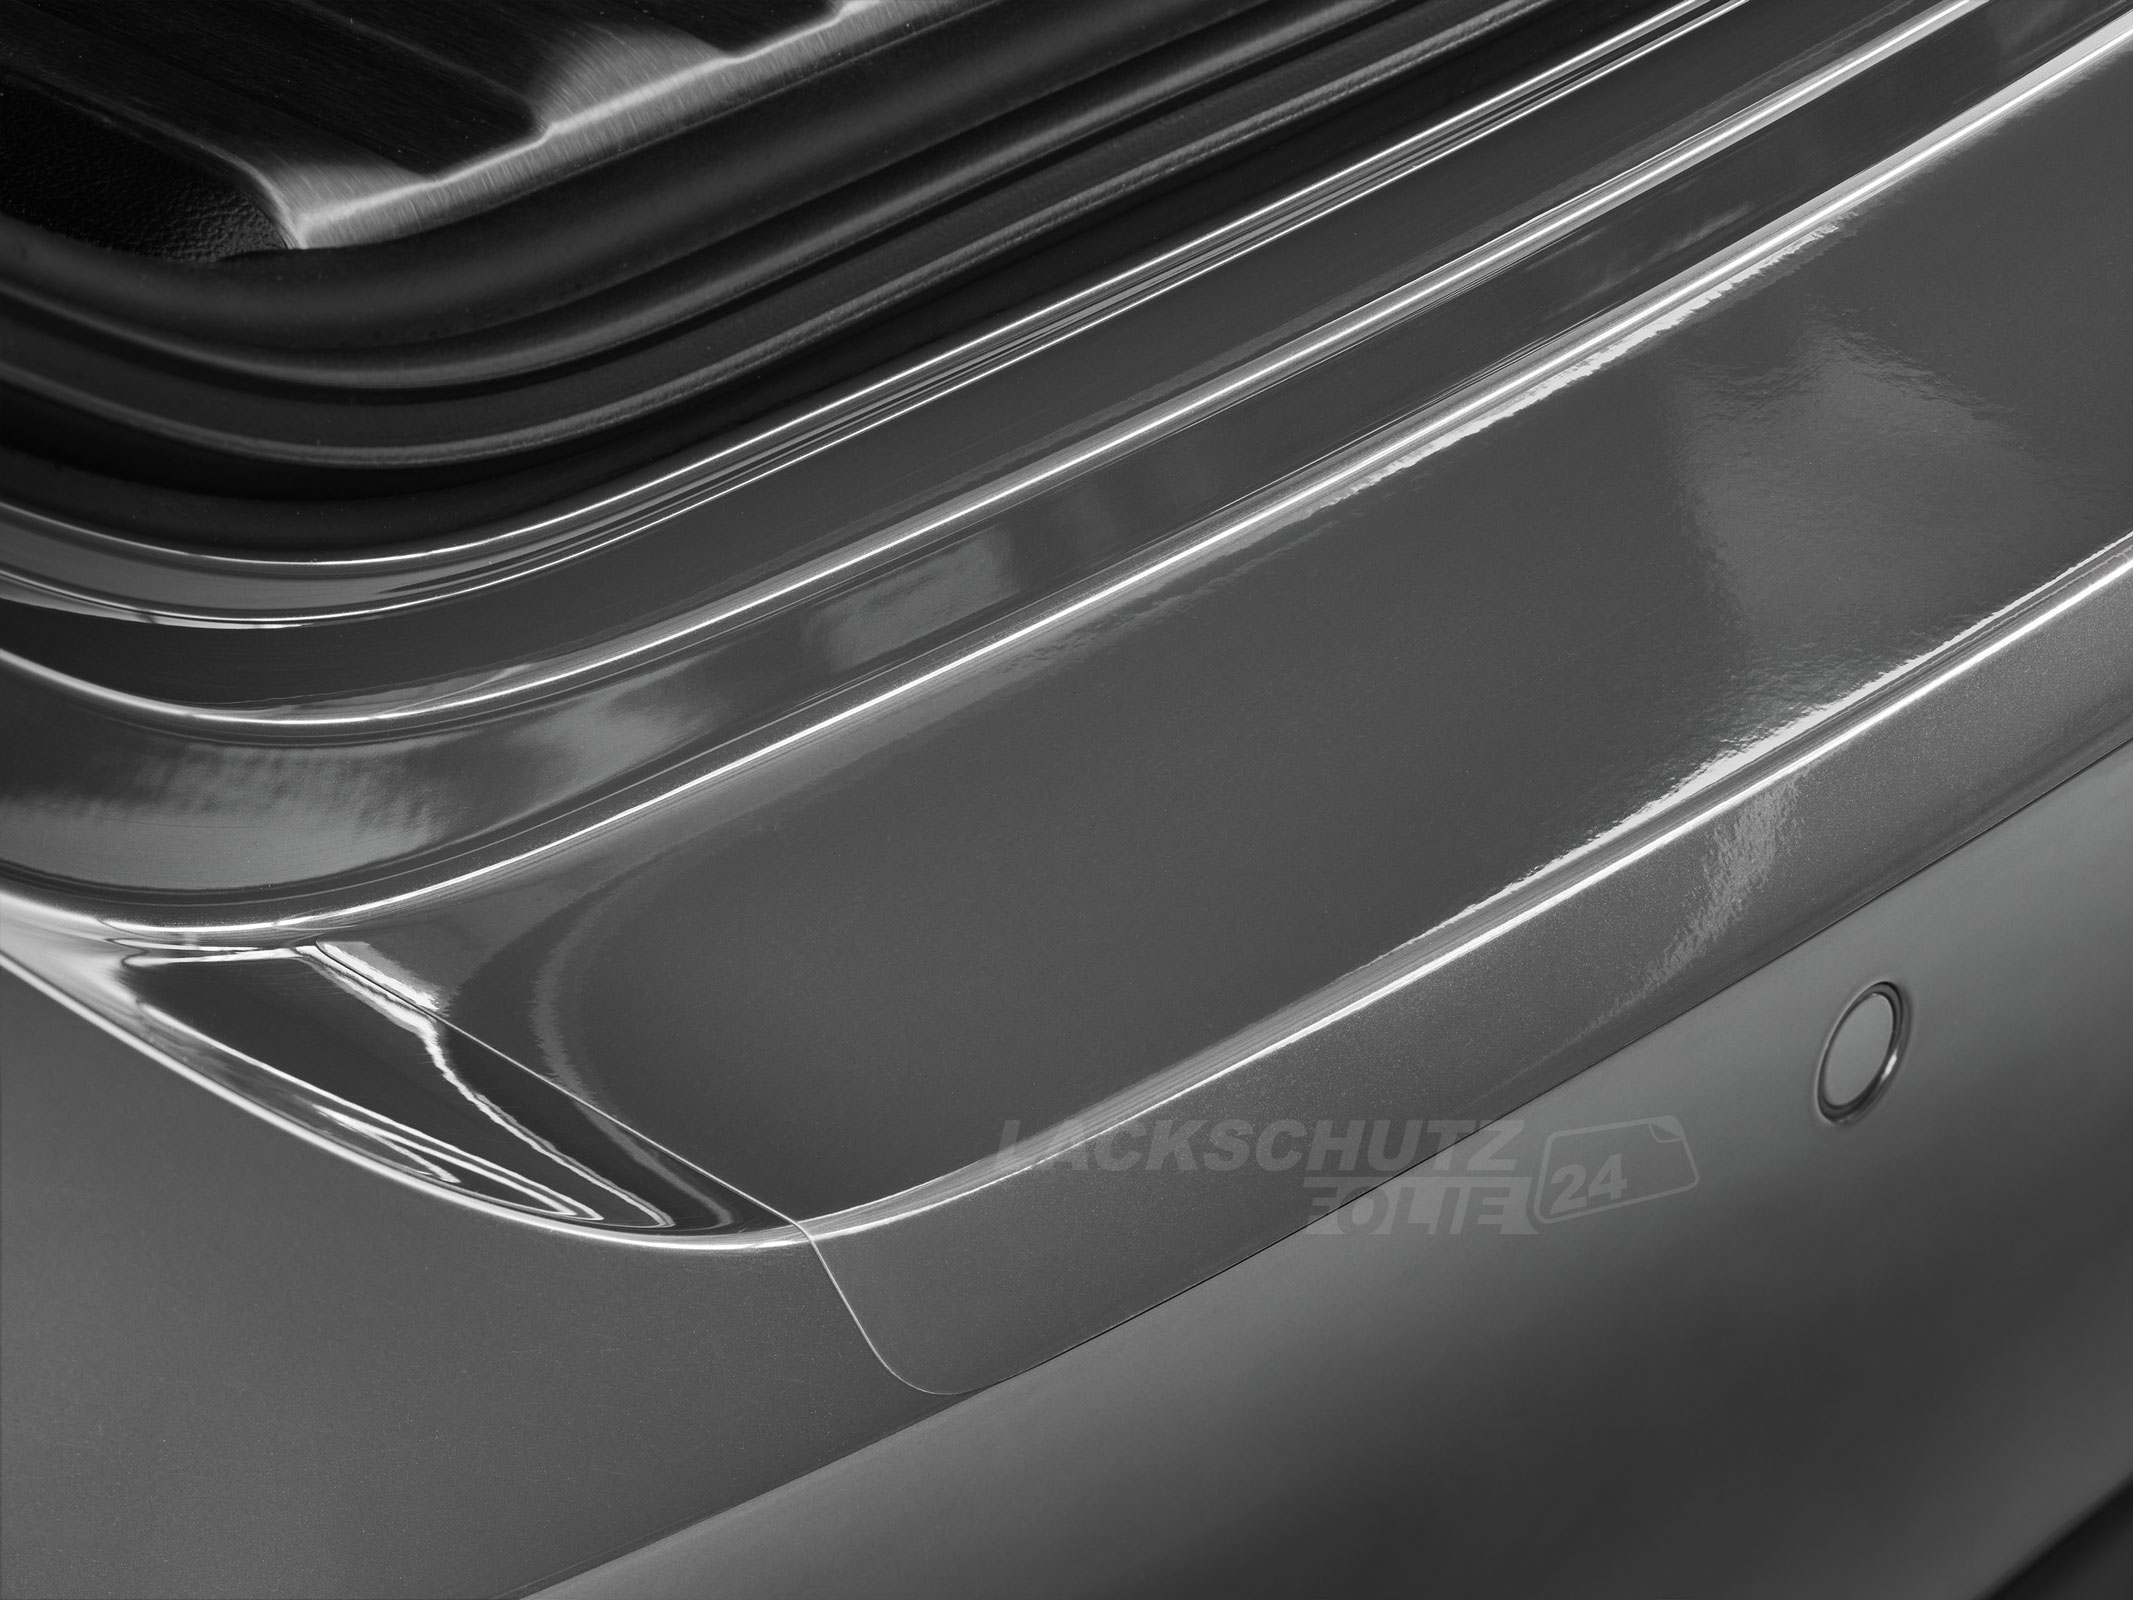 Ladekantenschutzfolie - Transparent Glatt Hochglänzend 150 µm stark für Renault Talisman Limousine ab BJ 01/2016